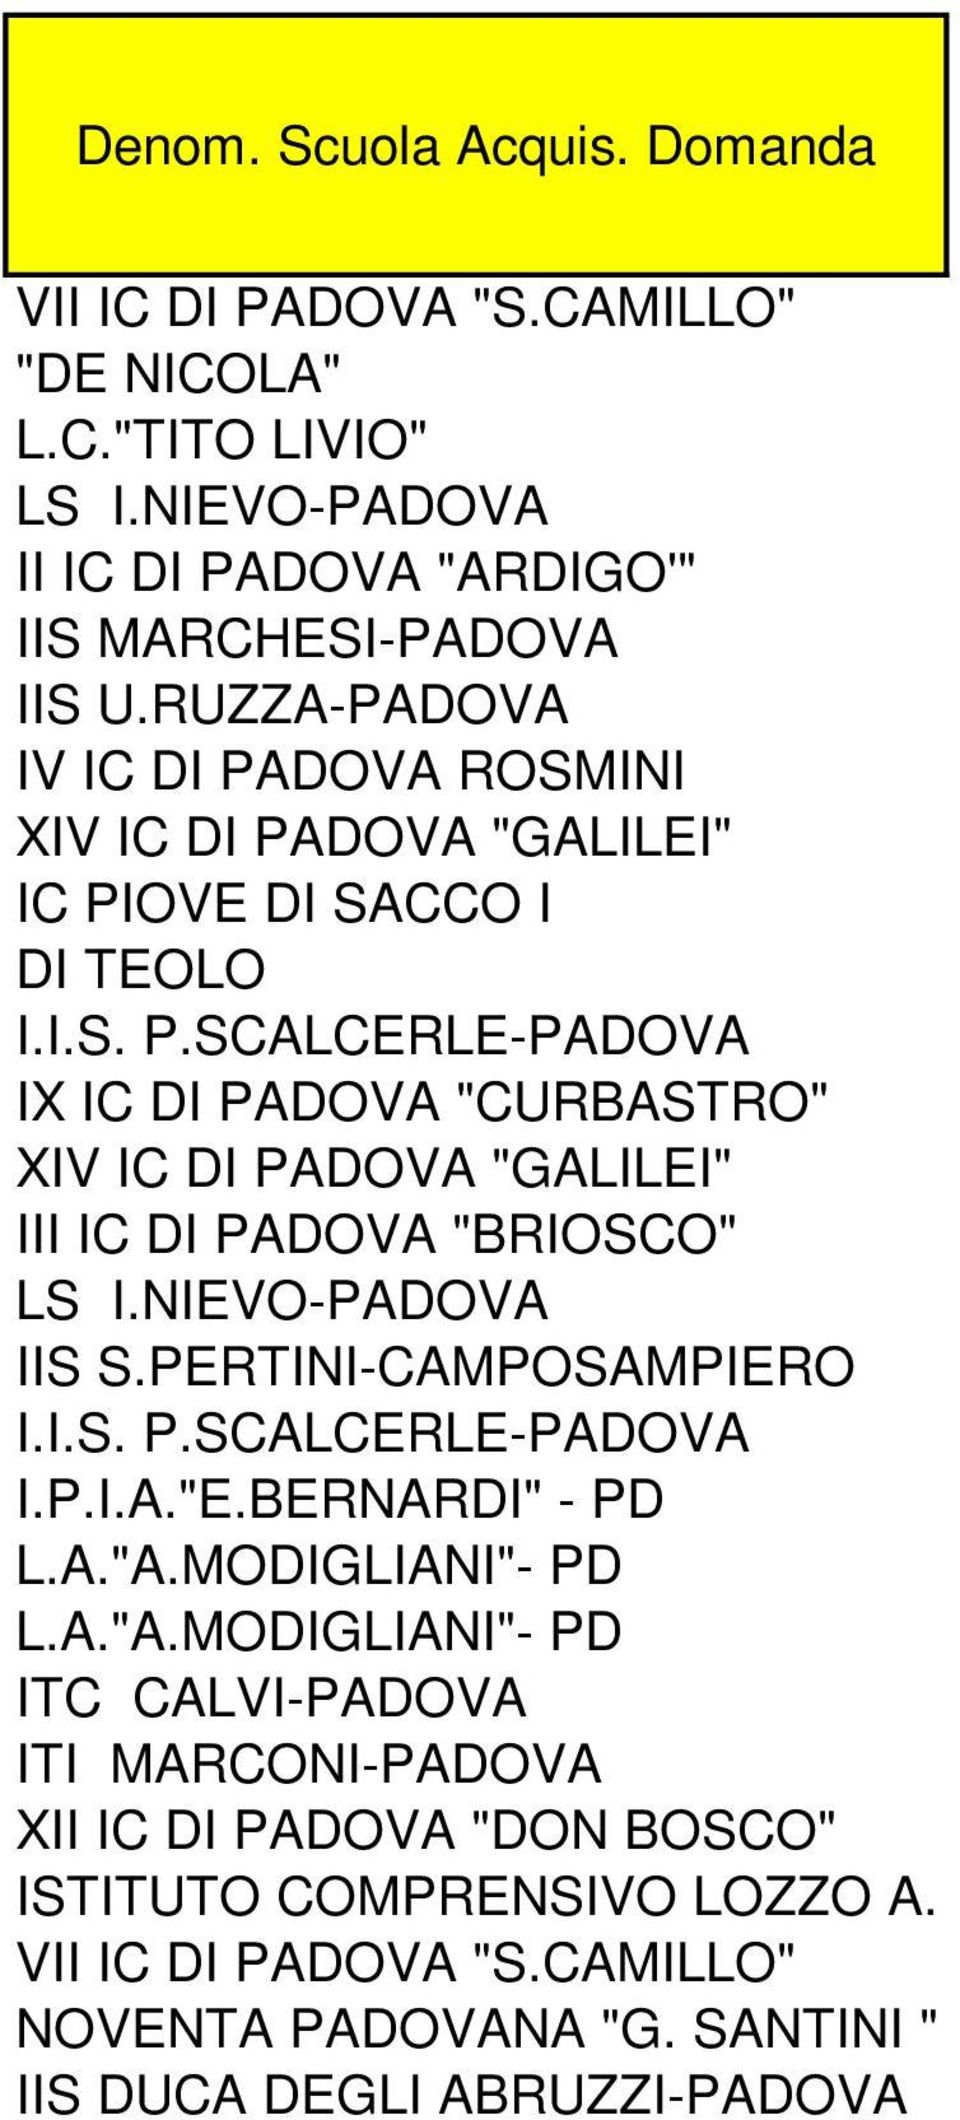 NIEVO-PADOVA IIS S.PERTINI-CAMPOSAMPIERO I.I.S. P.SCALCERLE-PADOVA I.P.I.A."E.BERNARDI" - PD L.A."A.